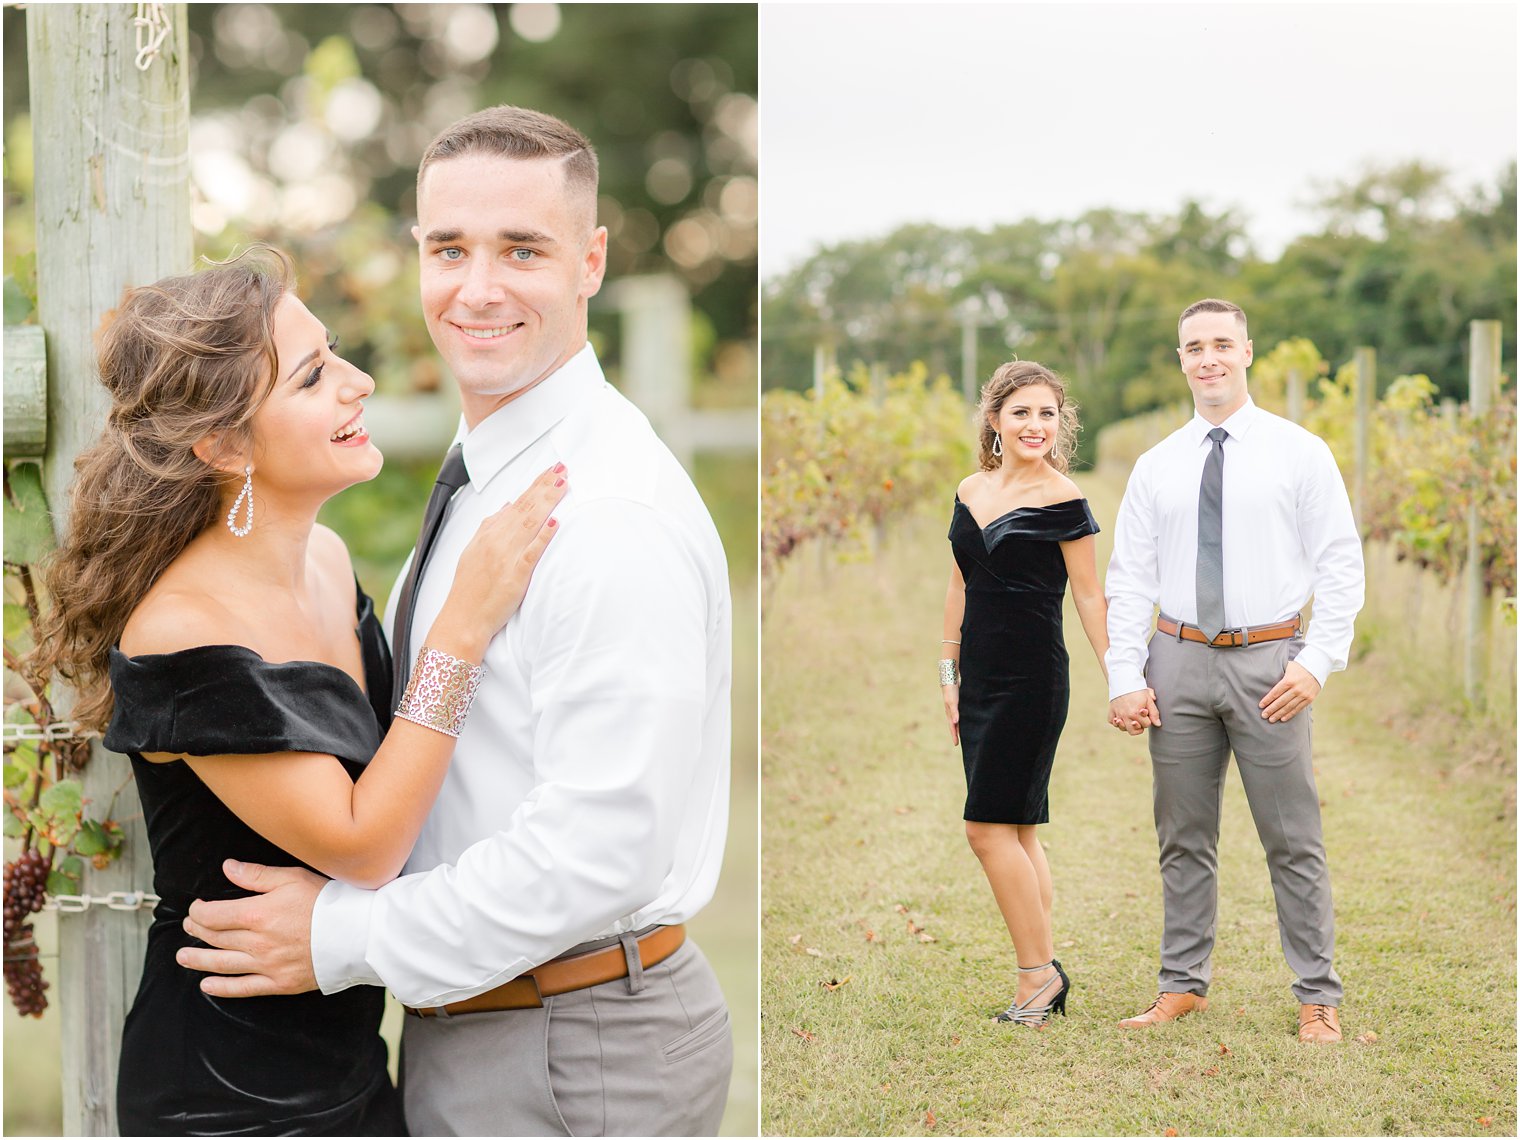 Engagement photos at Willow Creek Winery | Idalia Photography